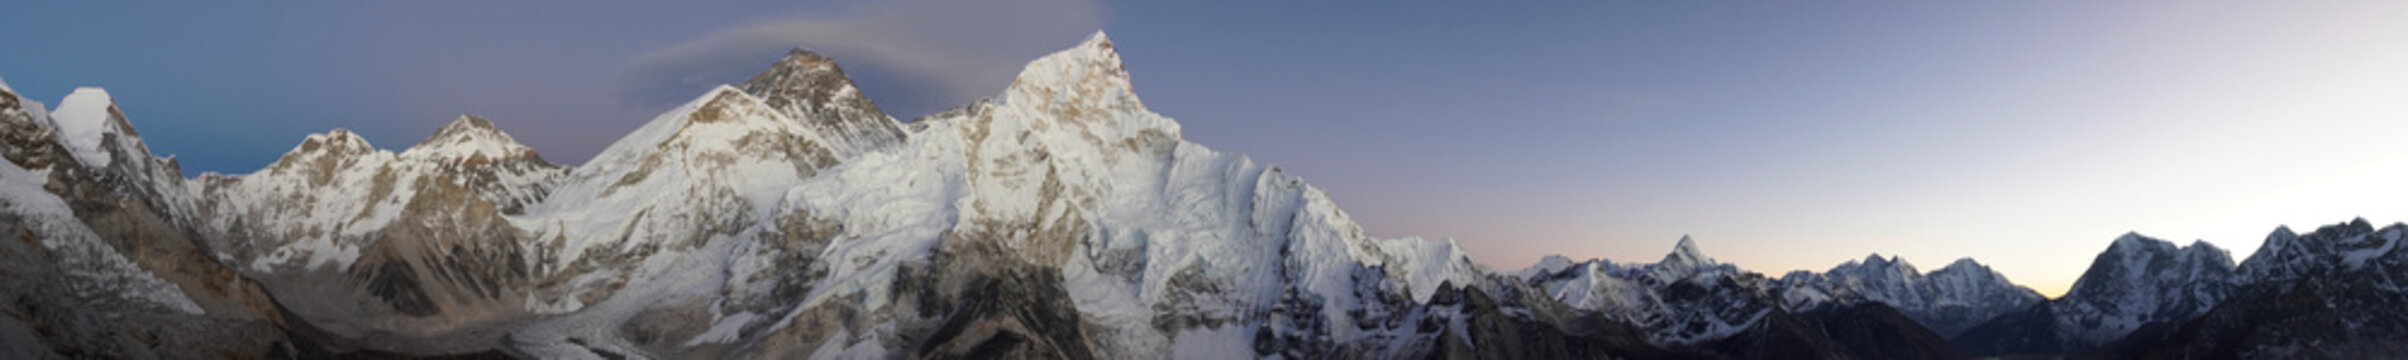 Everest at Sunset © Daniel